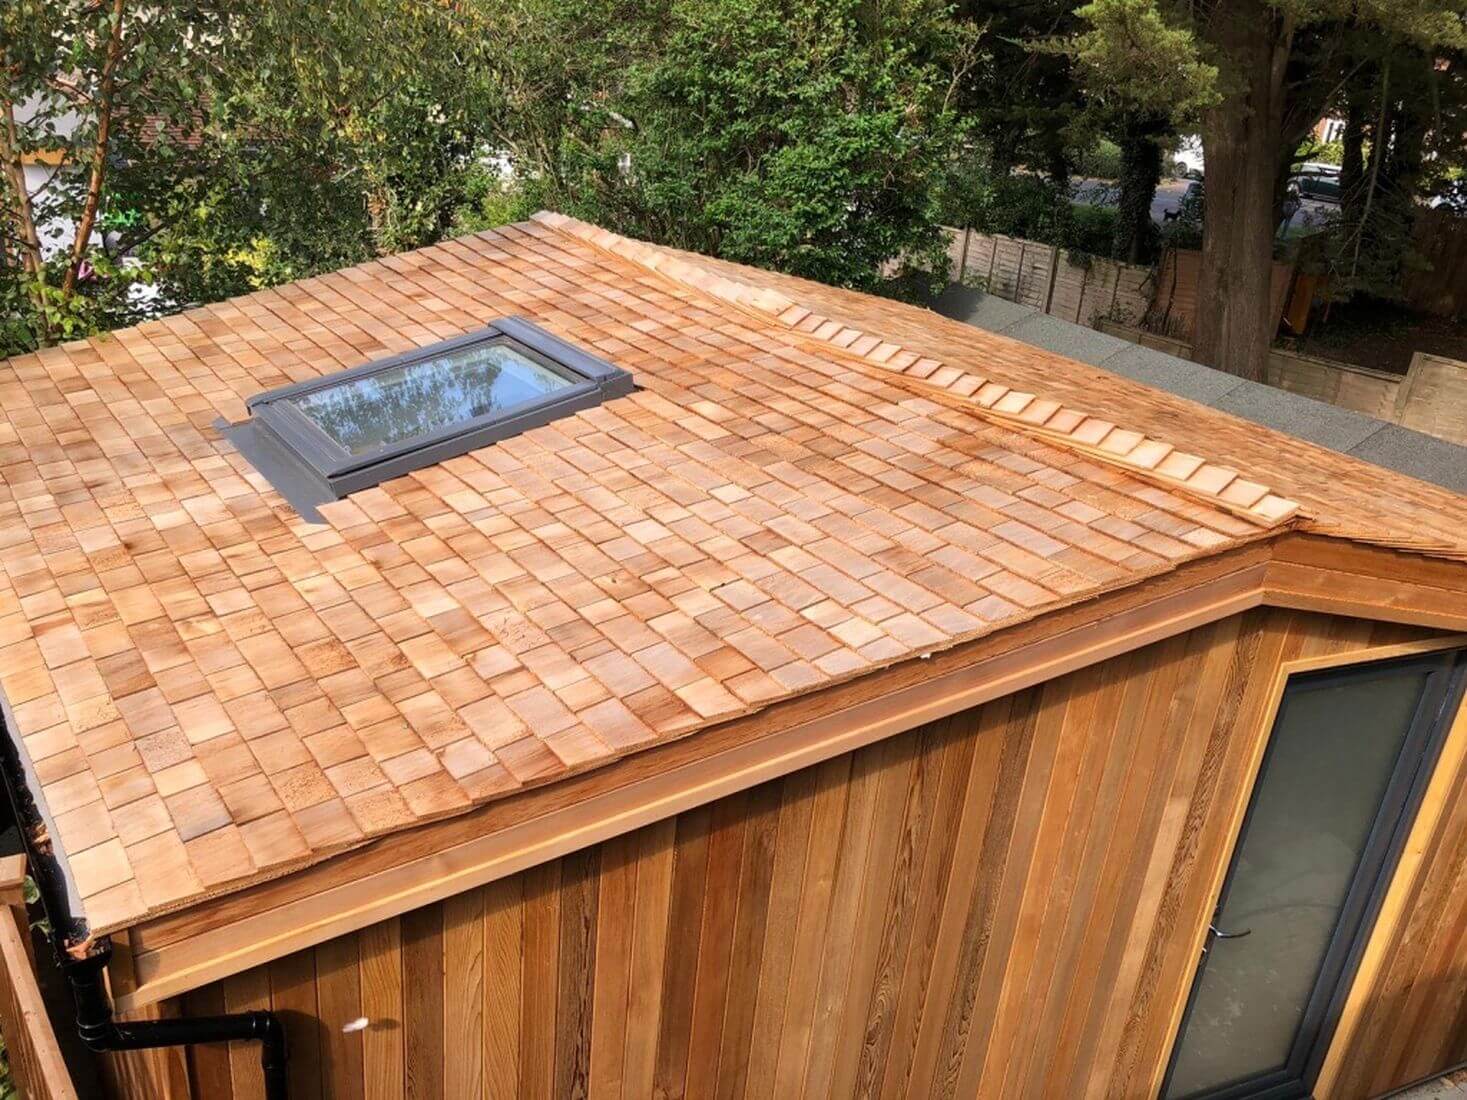 Wooden garden office with Velux roof window